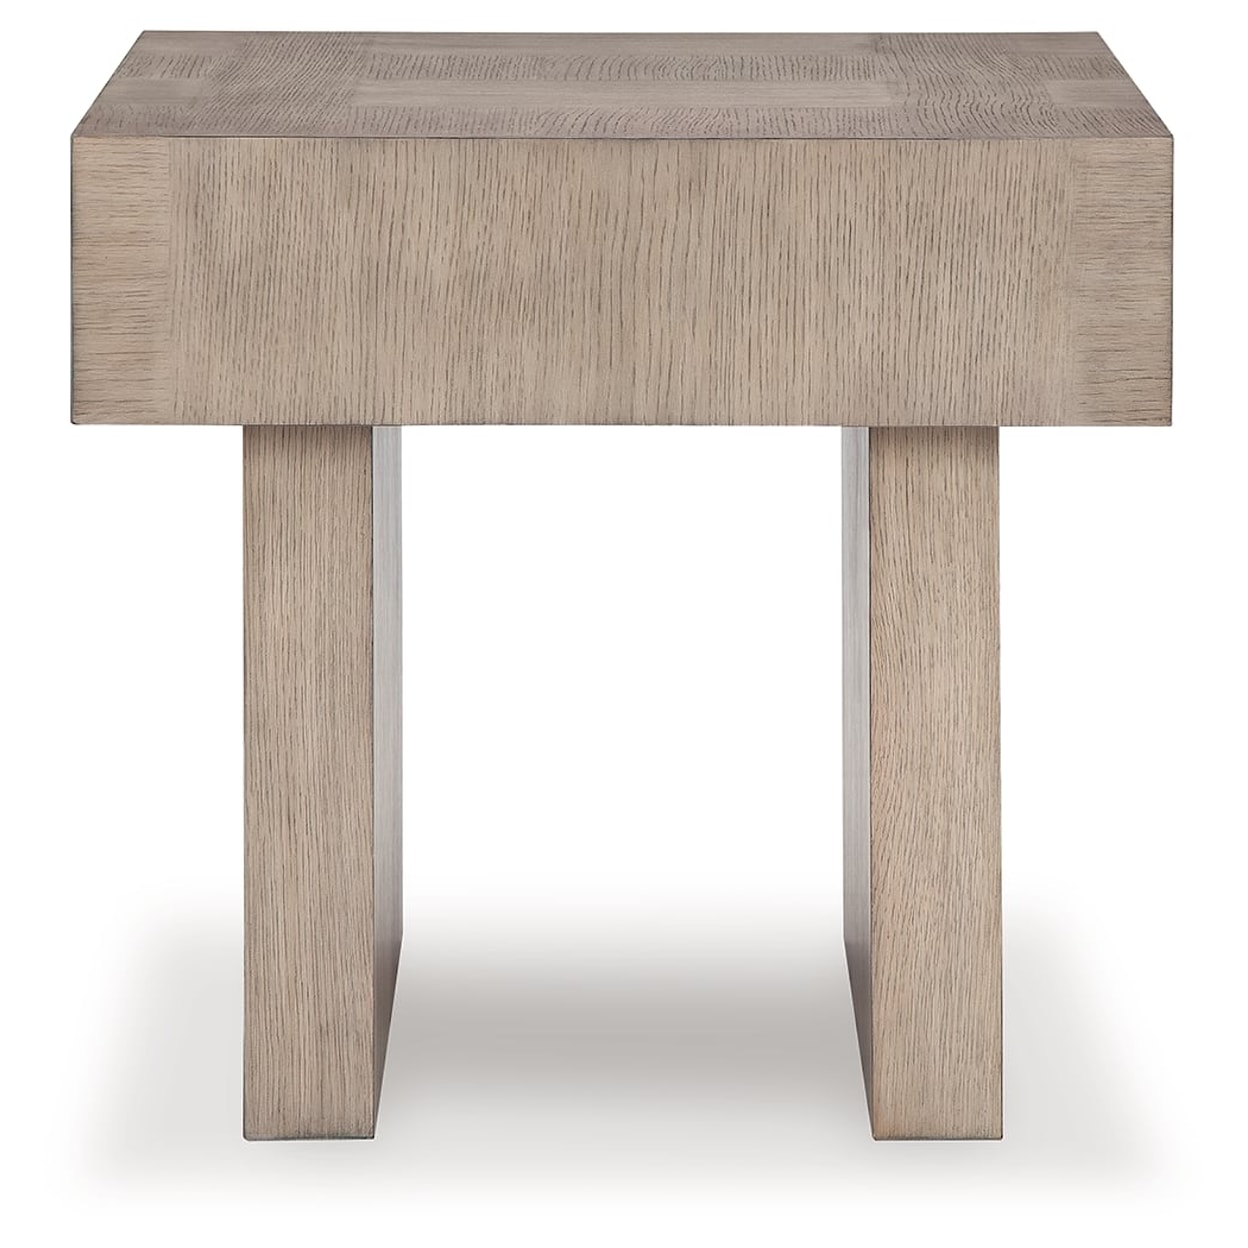 Ashley Furniture Signature Design Jorlaina Square End Table